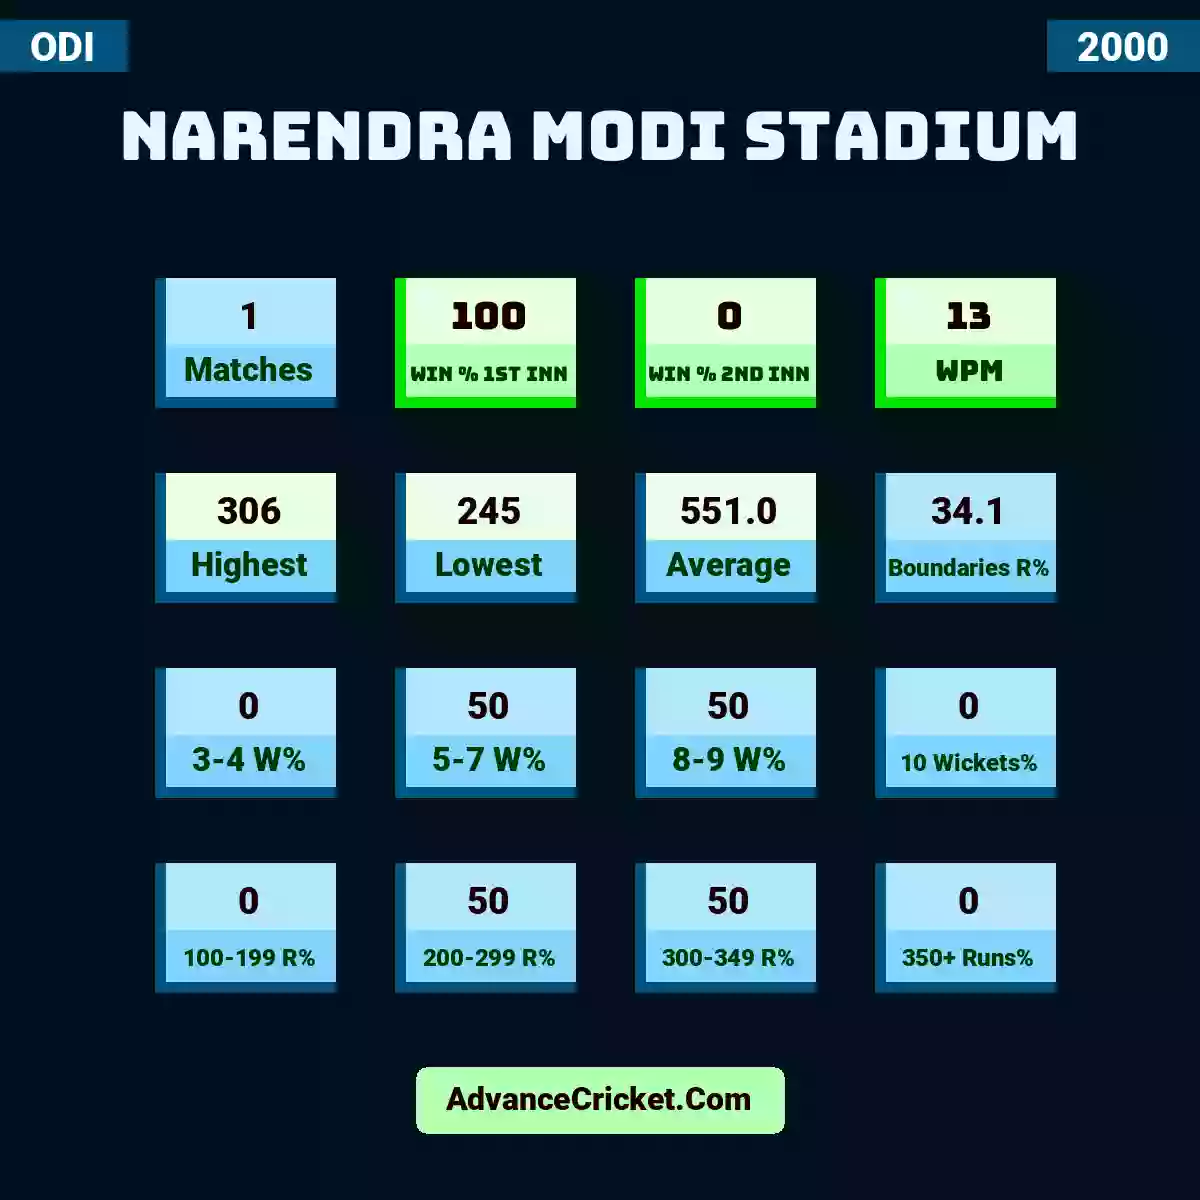 Image showing Narendra Modi Stadium with Matches: 1, Win % 1st Inn: 100, Win % 2nd Inn: 0, WPM: 13, Highest: 306, Lowest: 245, Average: 551.0, Boundaries R%: 34.1, 3-4 W%: 0, 5-7 W%: 50, 8-9 W%: 50, 10 Wickets%: 0, 100-199 R%: 0, 200-299 R%: 50, 300-349 R%: 50, 350+ Runs%: 0.